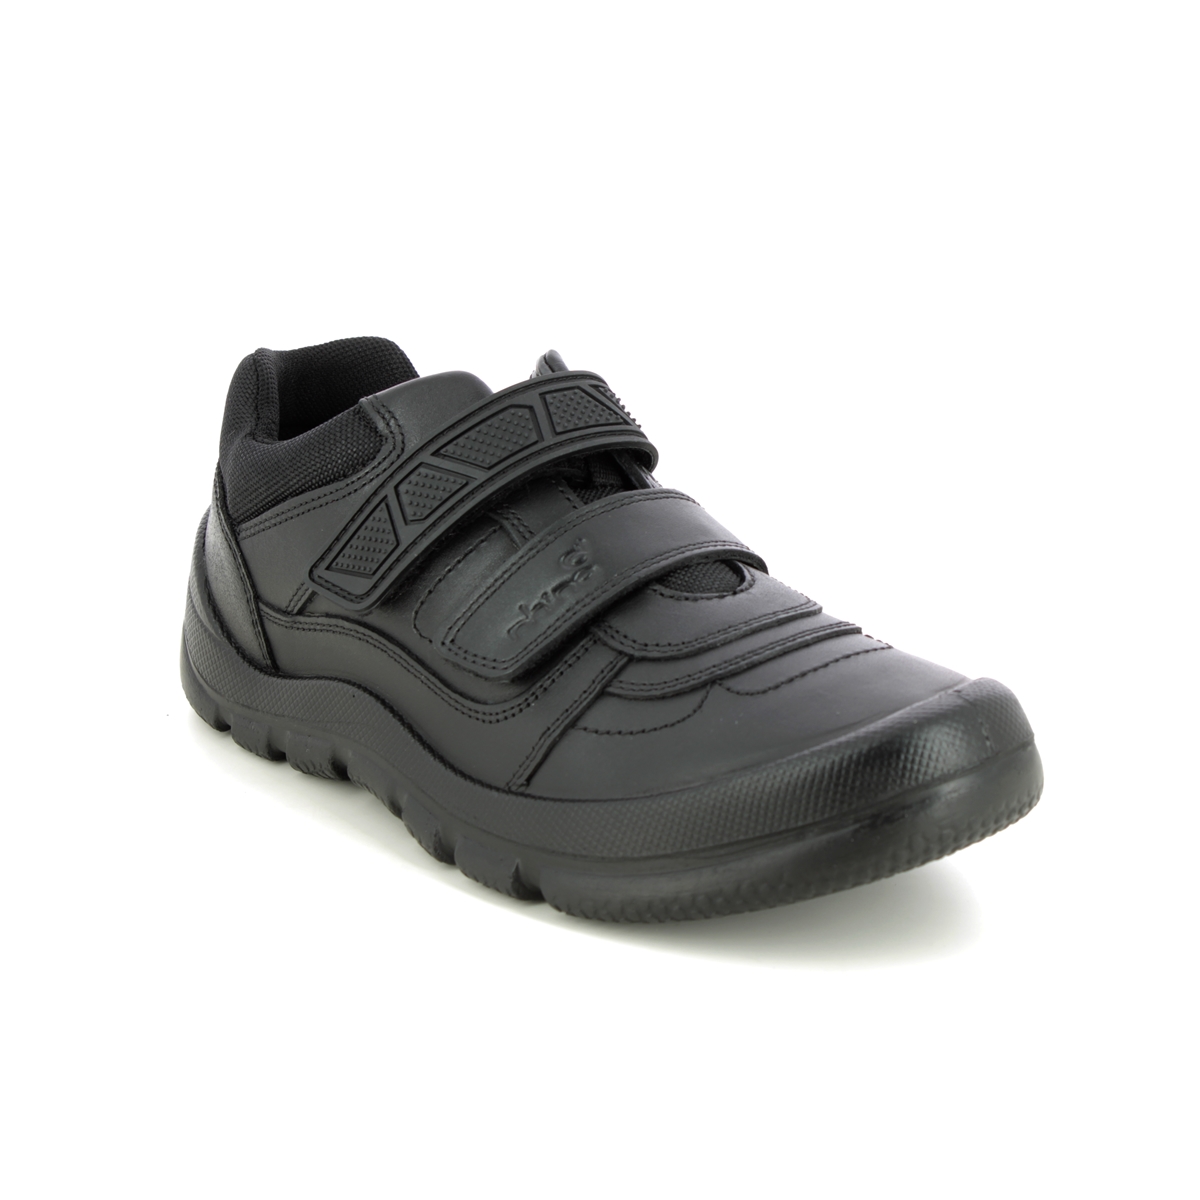 Start Rite - Rhino Warrior In Black Leather 8237-76F In Size 5 In Plain Black Leather For School Boys Shoes  In Black Leather For kids